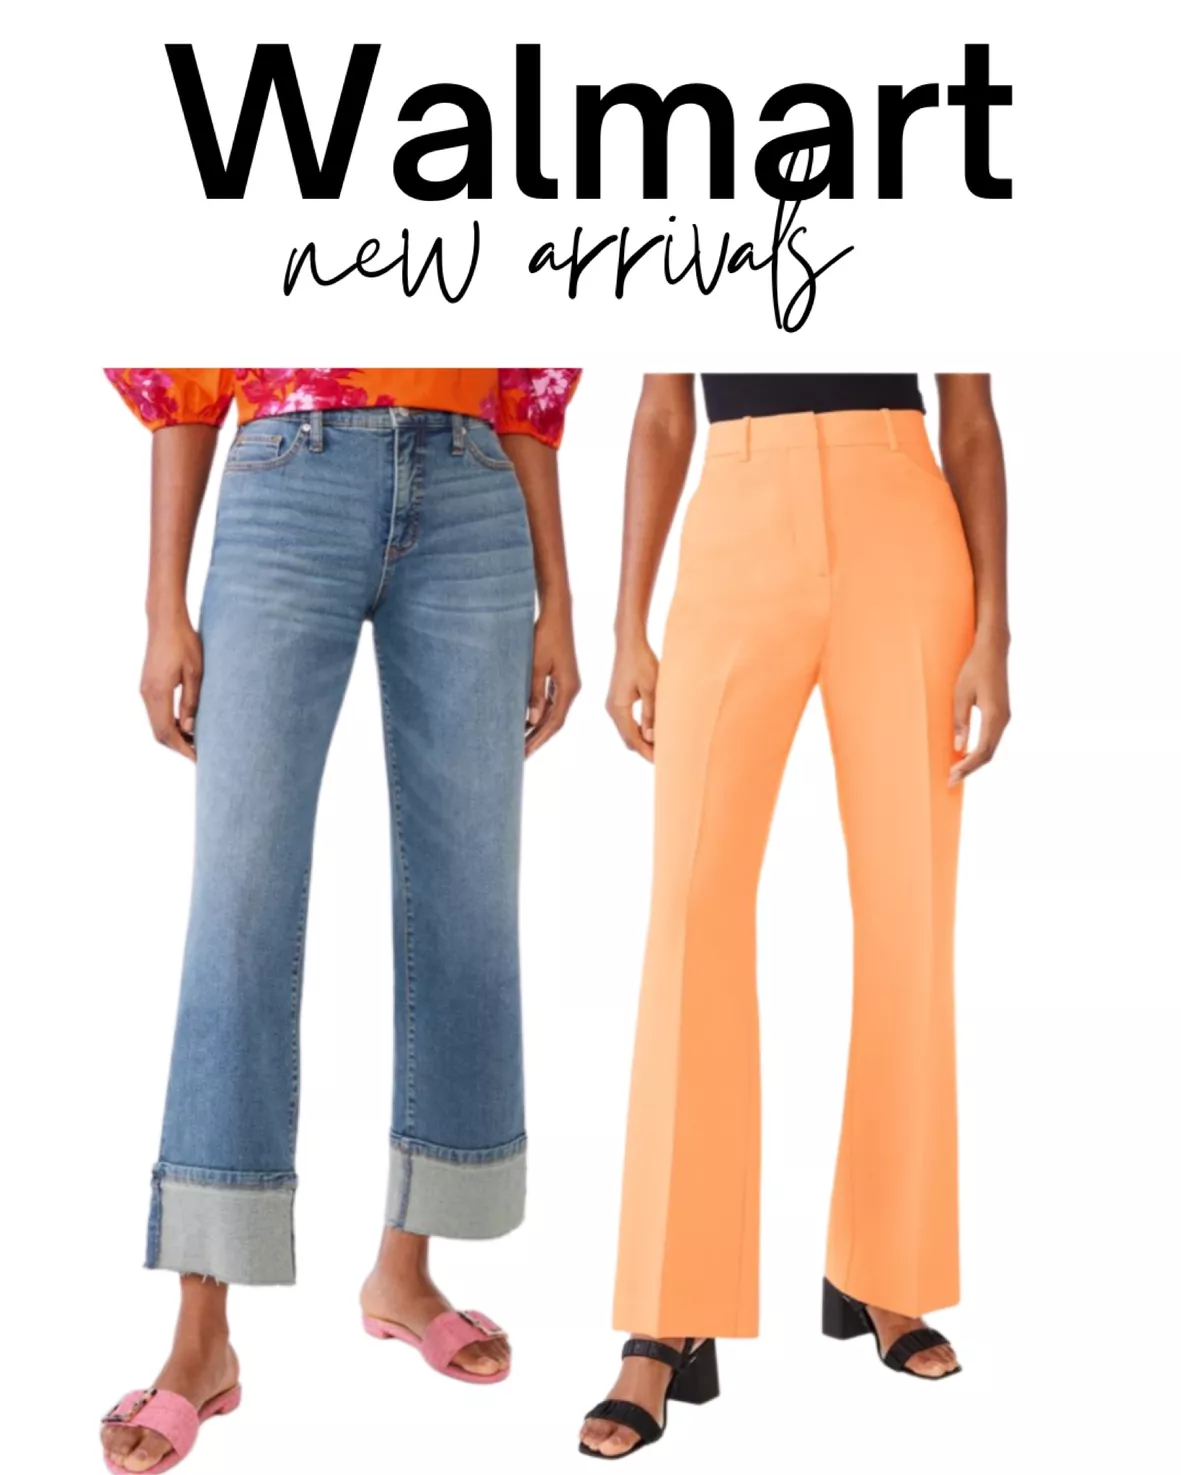 Walmart wide leg jeans!#walmart #walmartfinds